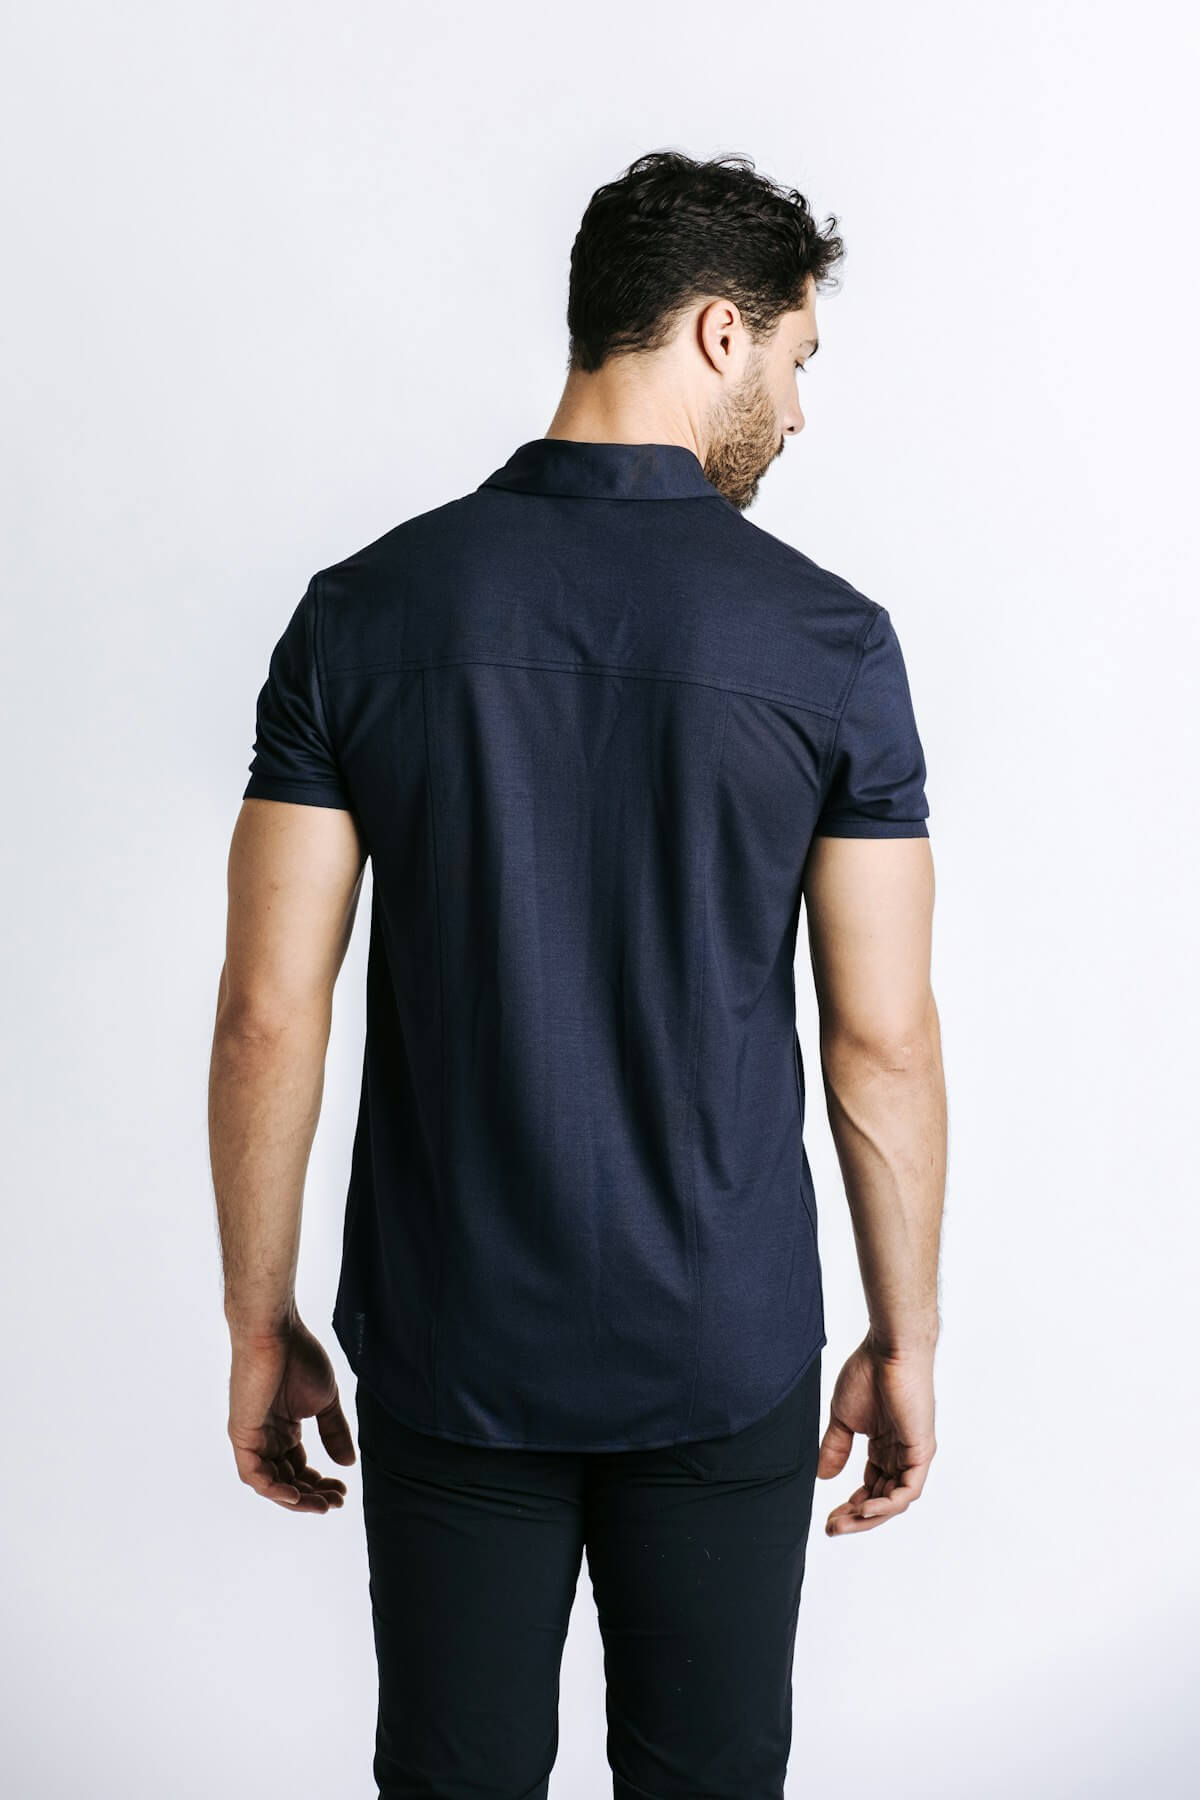 Limitless Merino Short Sleeve Shirt - Indigo
